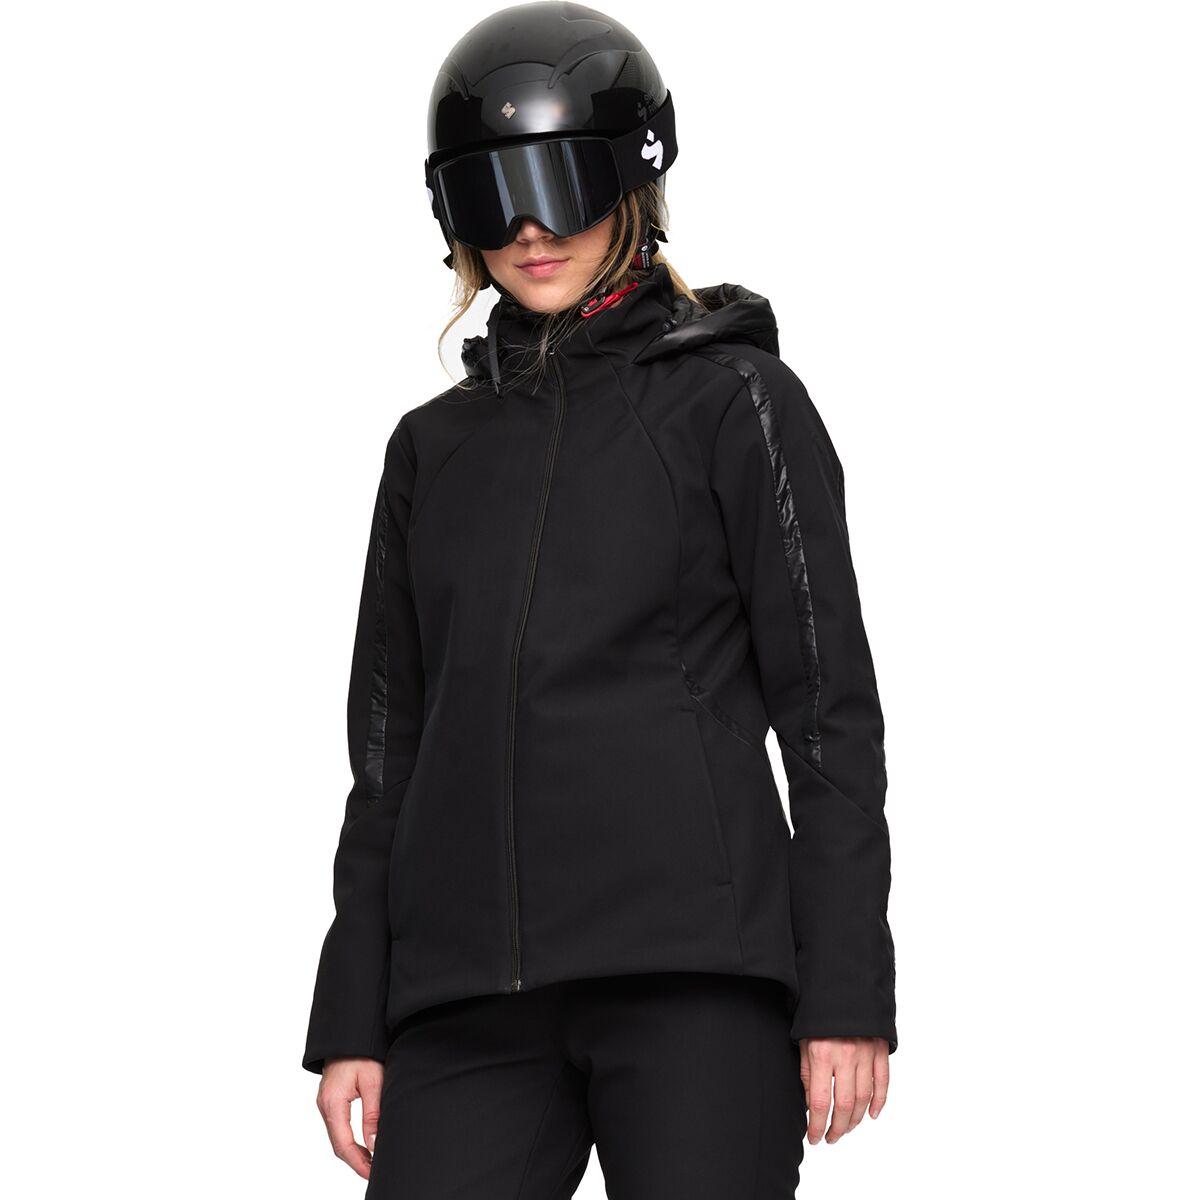 Kari Traa Benedicte Ski Jacket - Women's Black